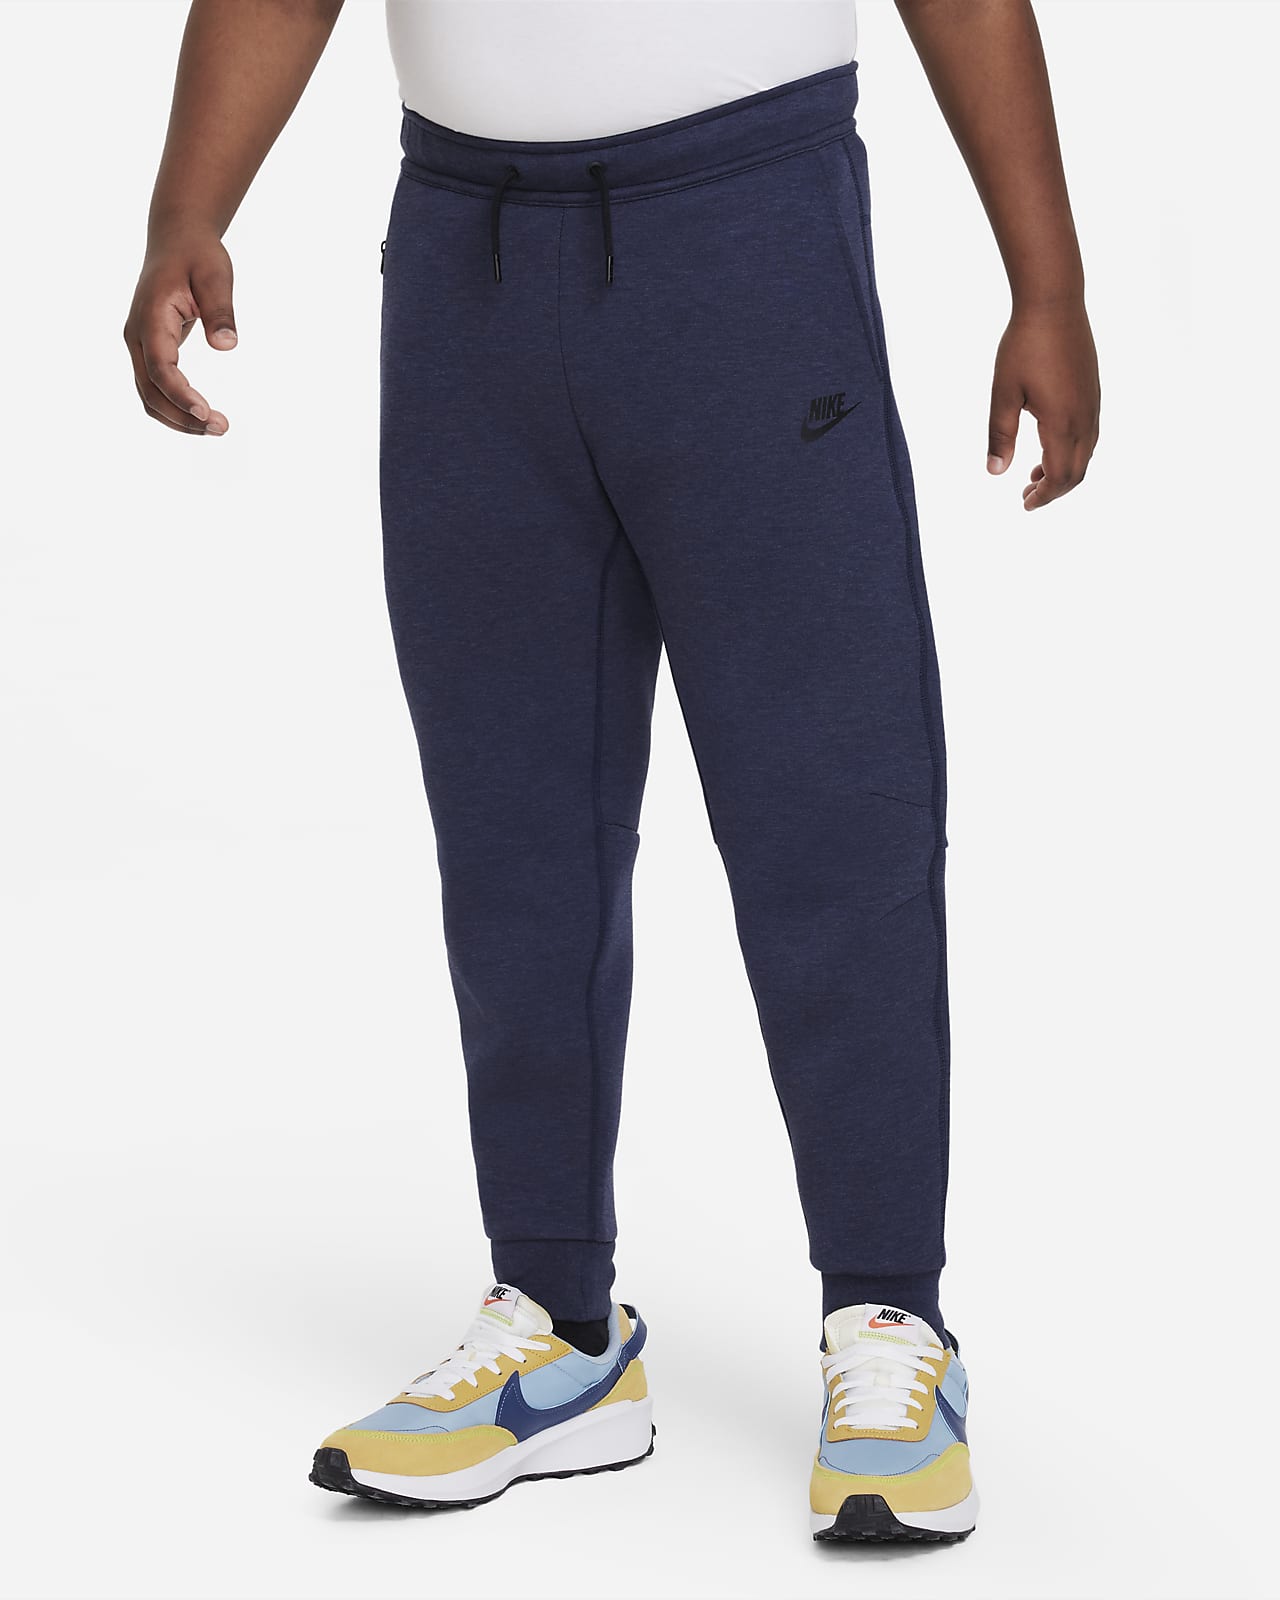 Calças Nike Sportswear Tech Fleece Júnior (Rapaz) (tamanhos grandes)